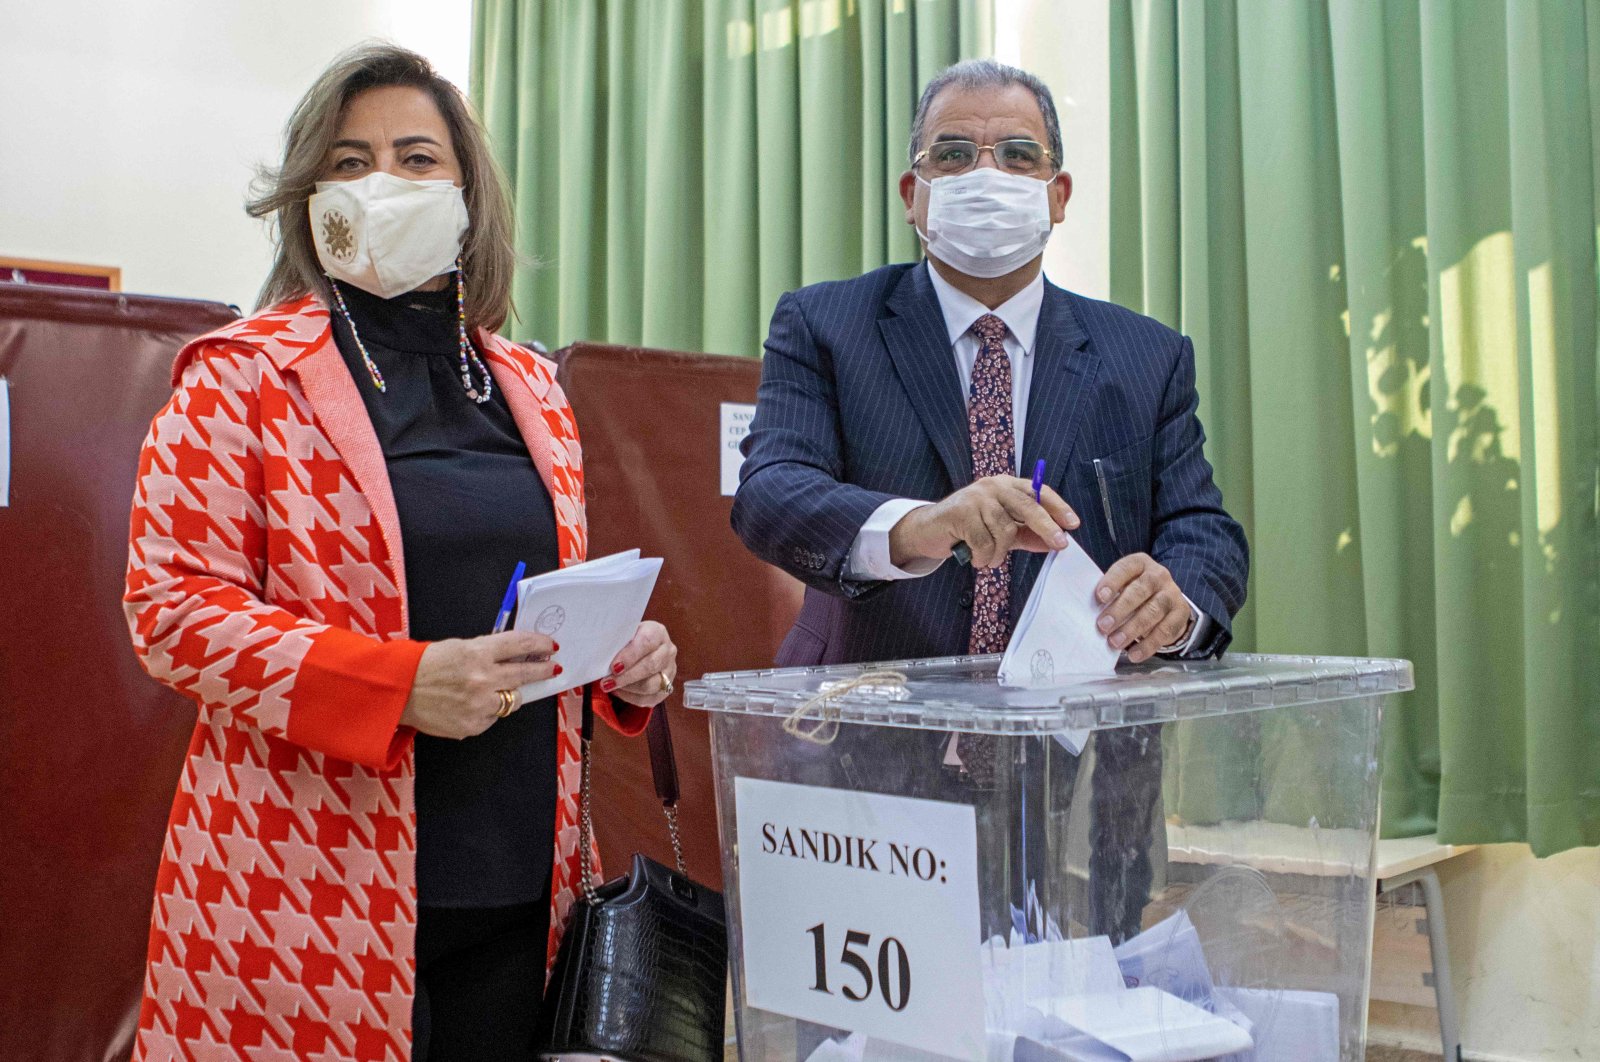 Prime Minister Faiz Sucuoğlu alongside his wife casts his ballot at a polling station in the capital Lefkoşa (Nicosia), TRNC, Jan. 23, 2022. (AFP Photo)